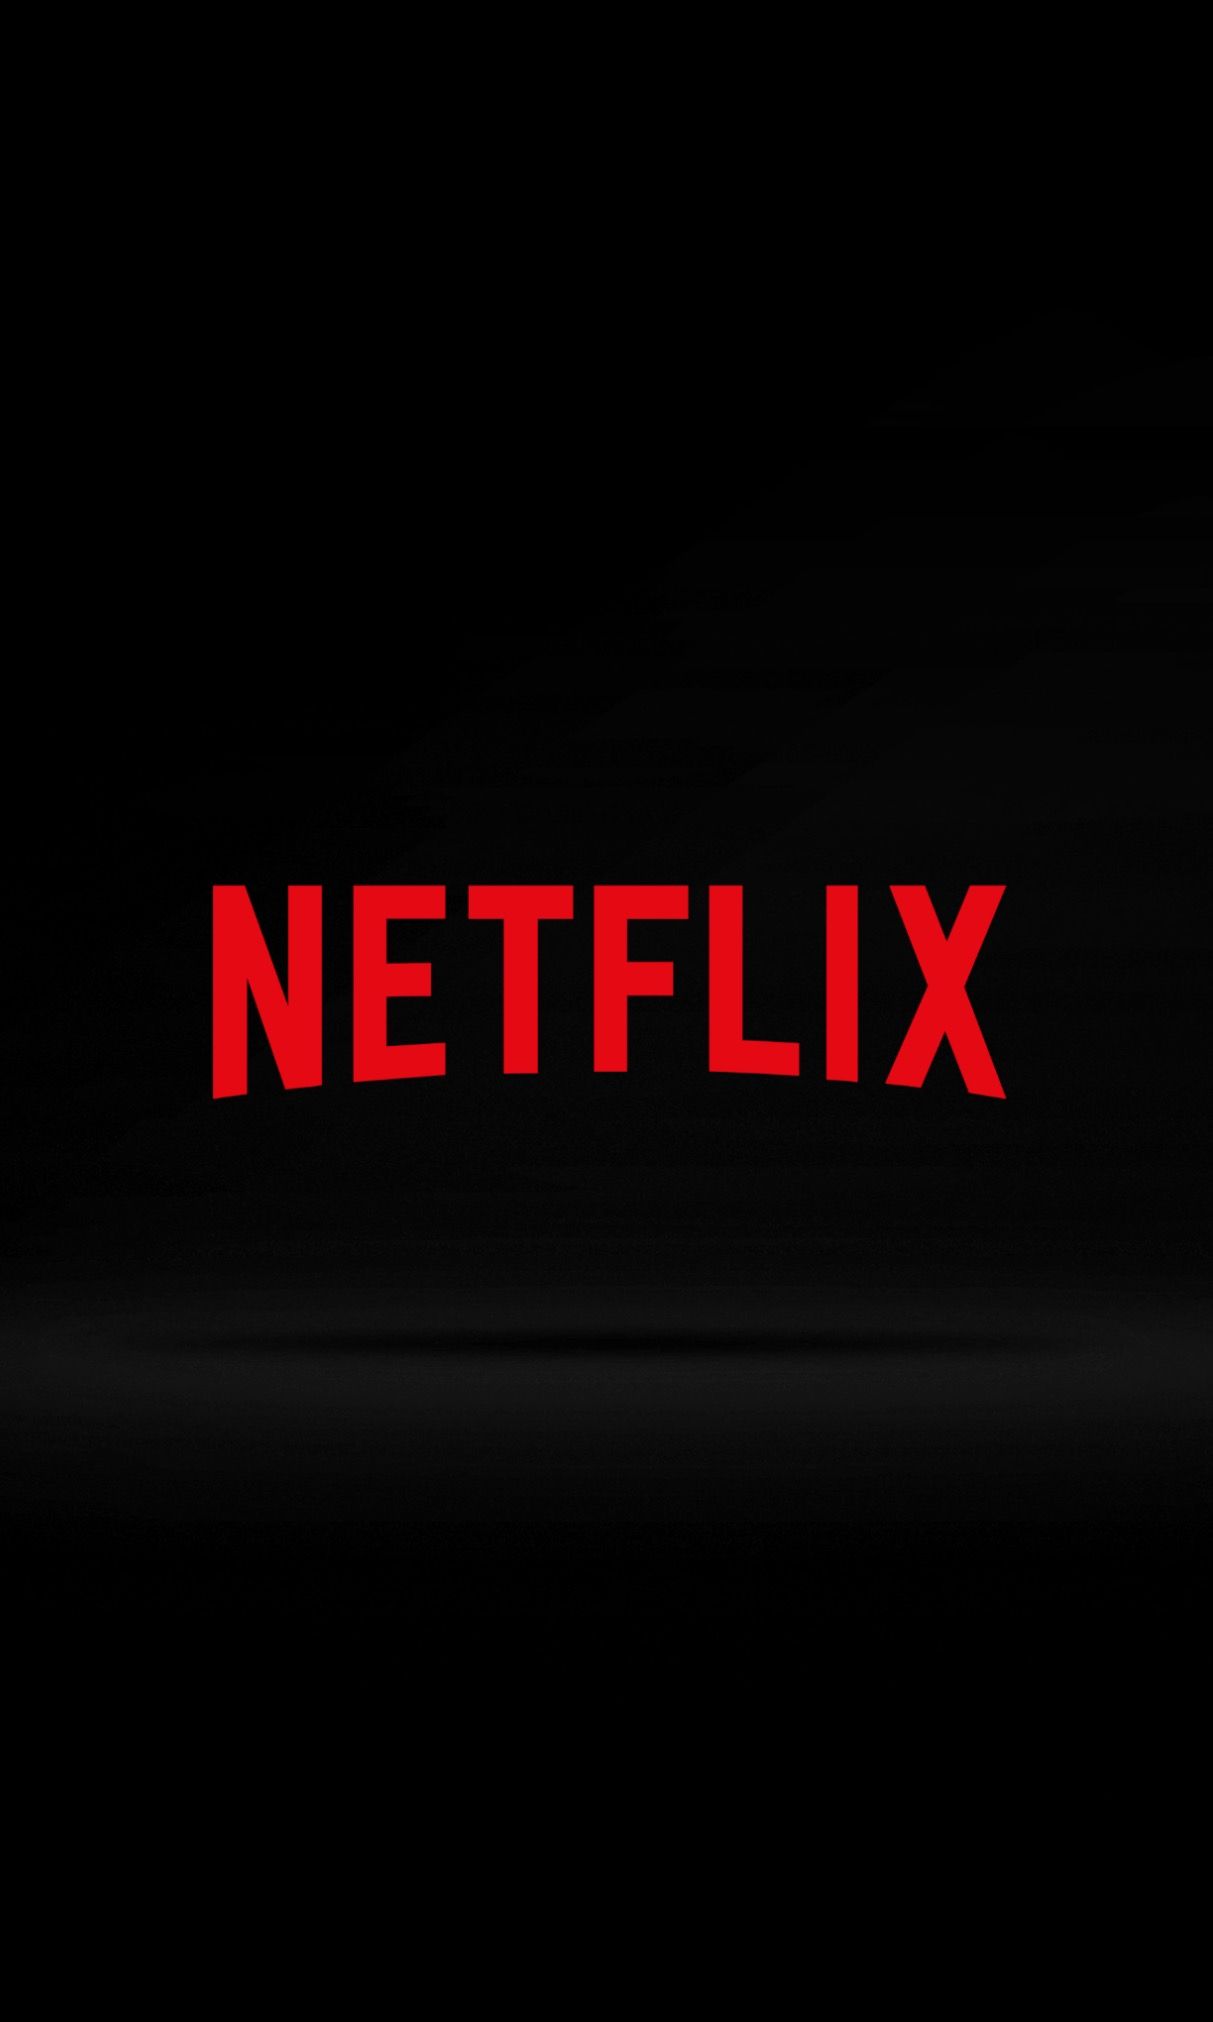 Netflix logo in red on a black background - Netflix